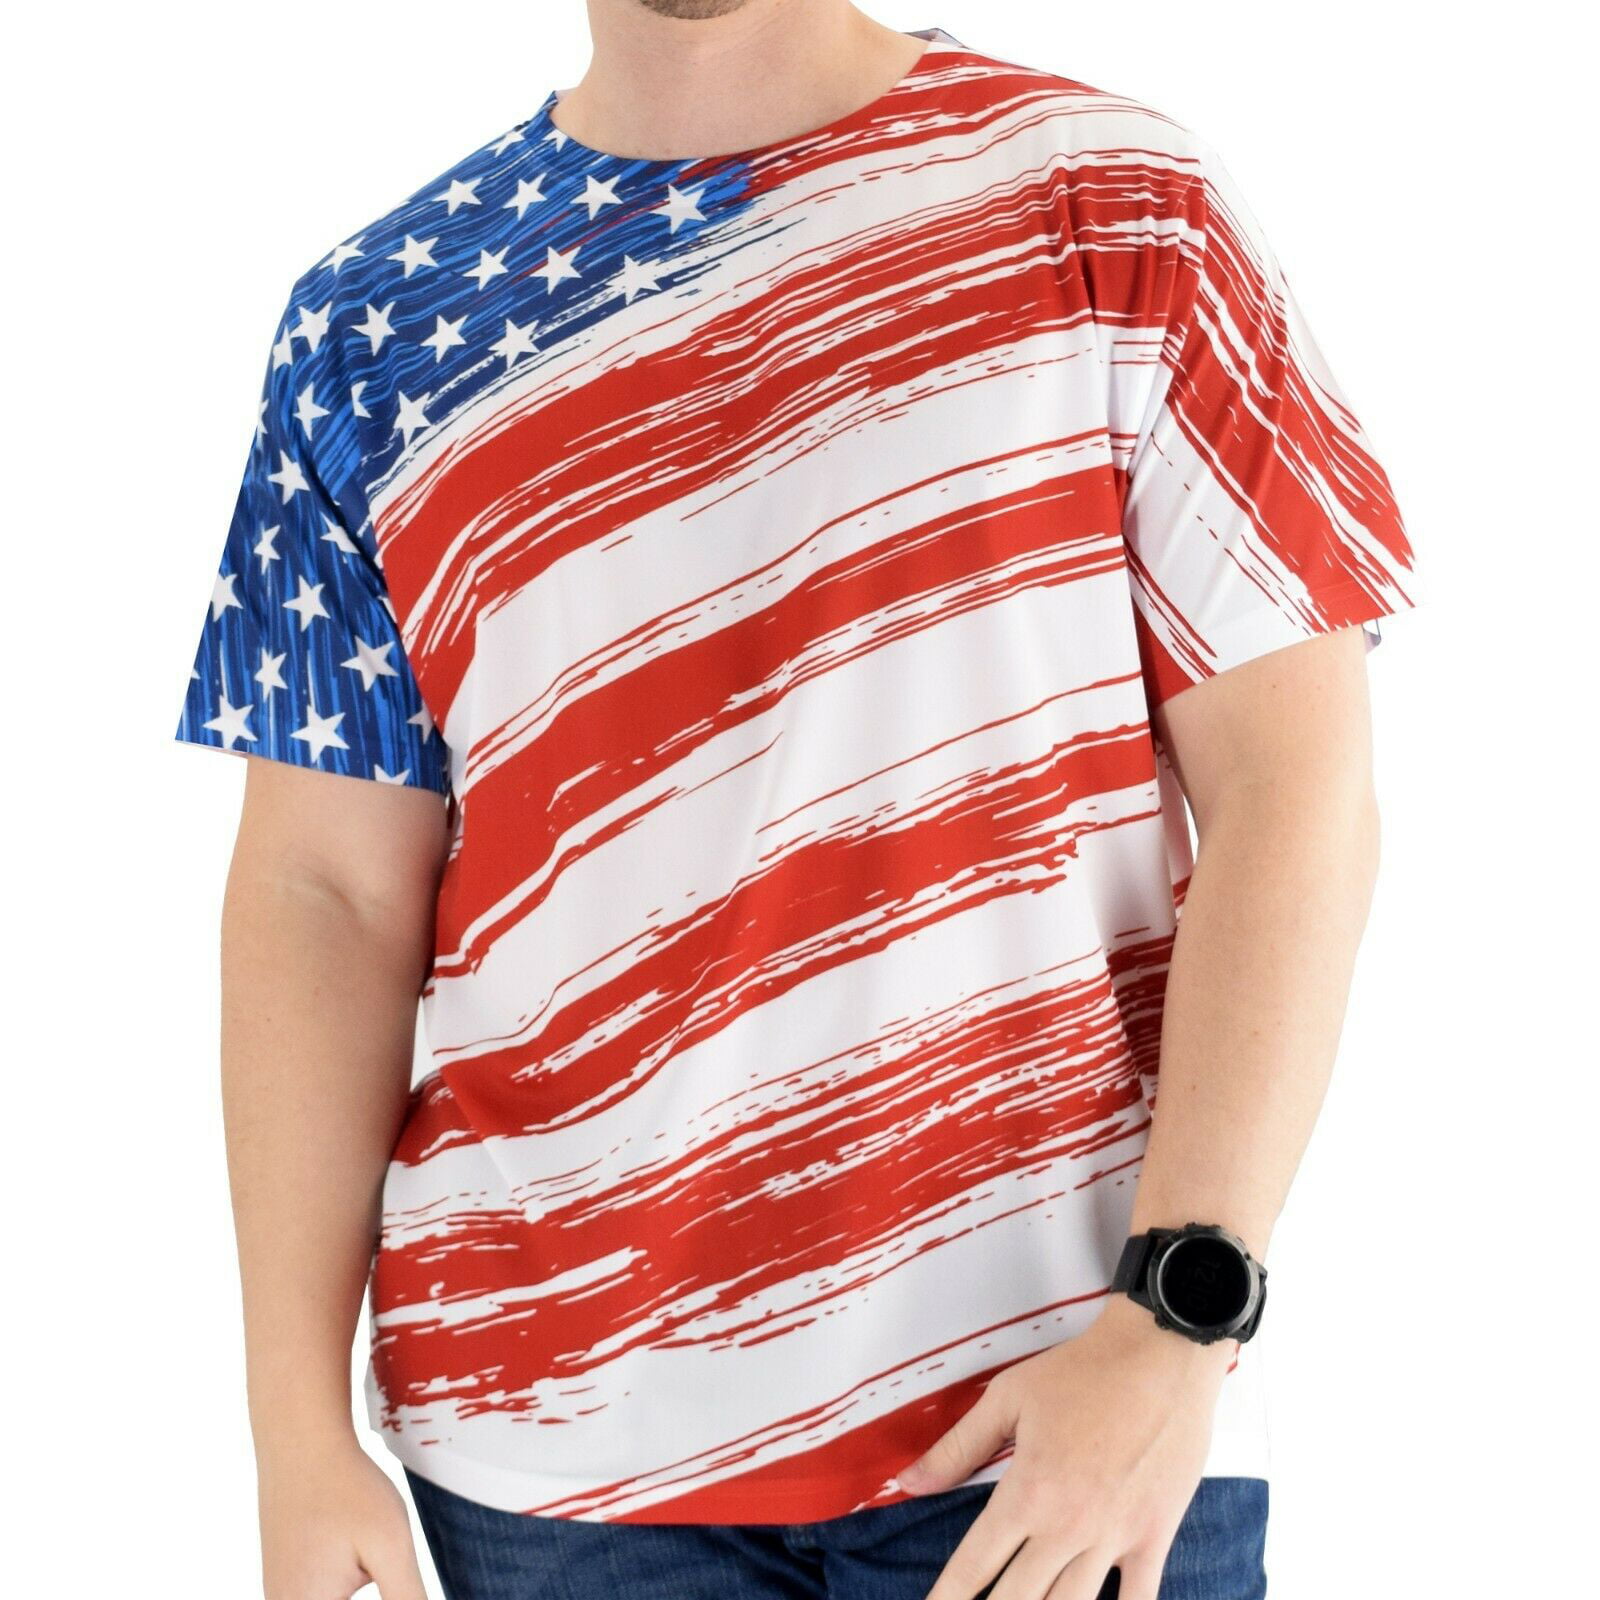 Mens long sleeve American Flag Tshirt 'Resilience' graphic sizes Sm-4XL